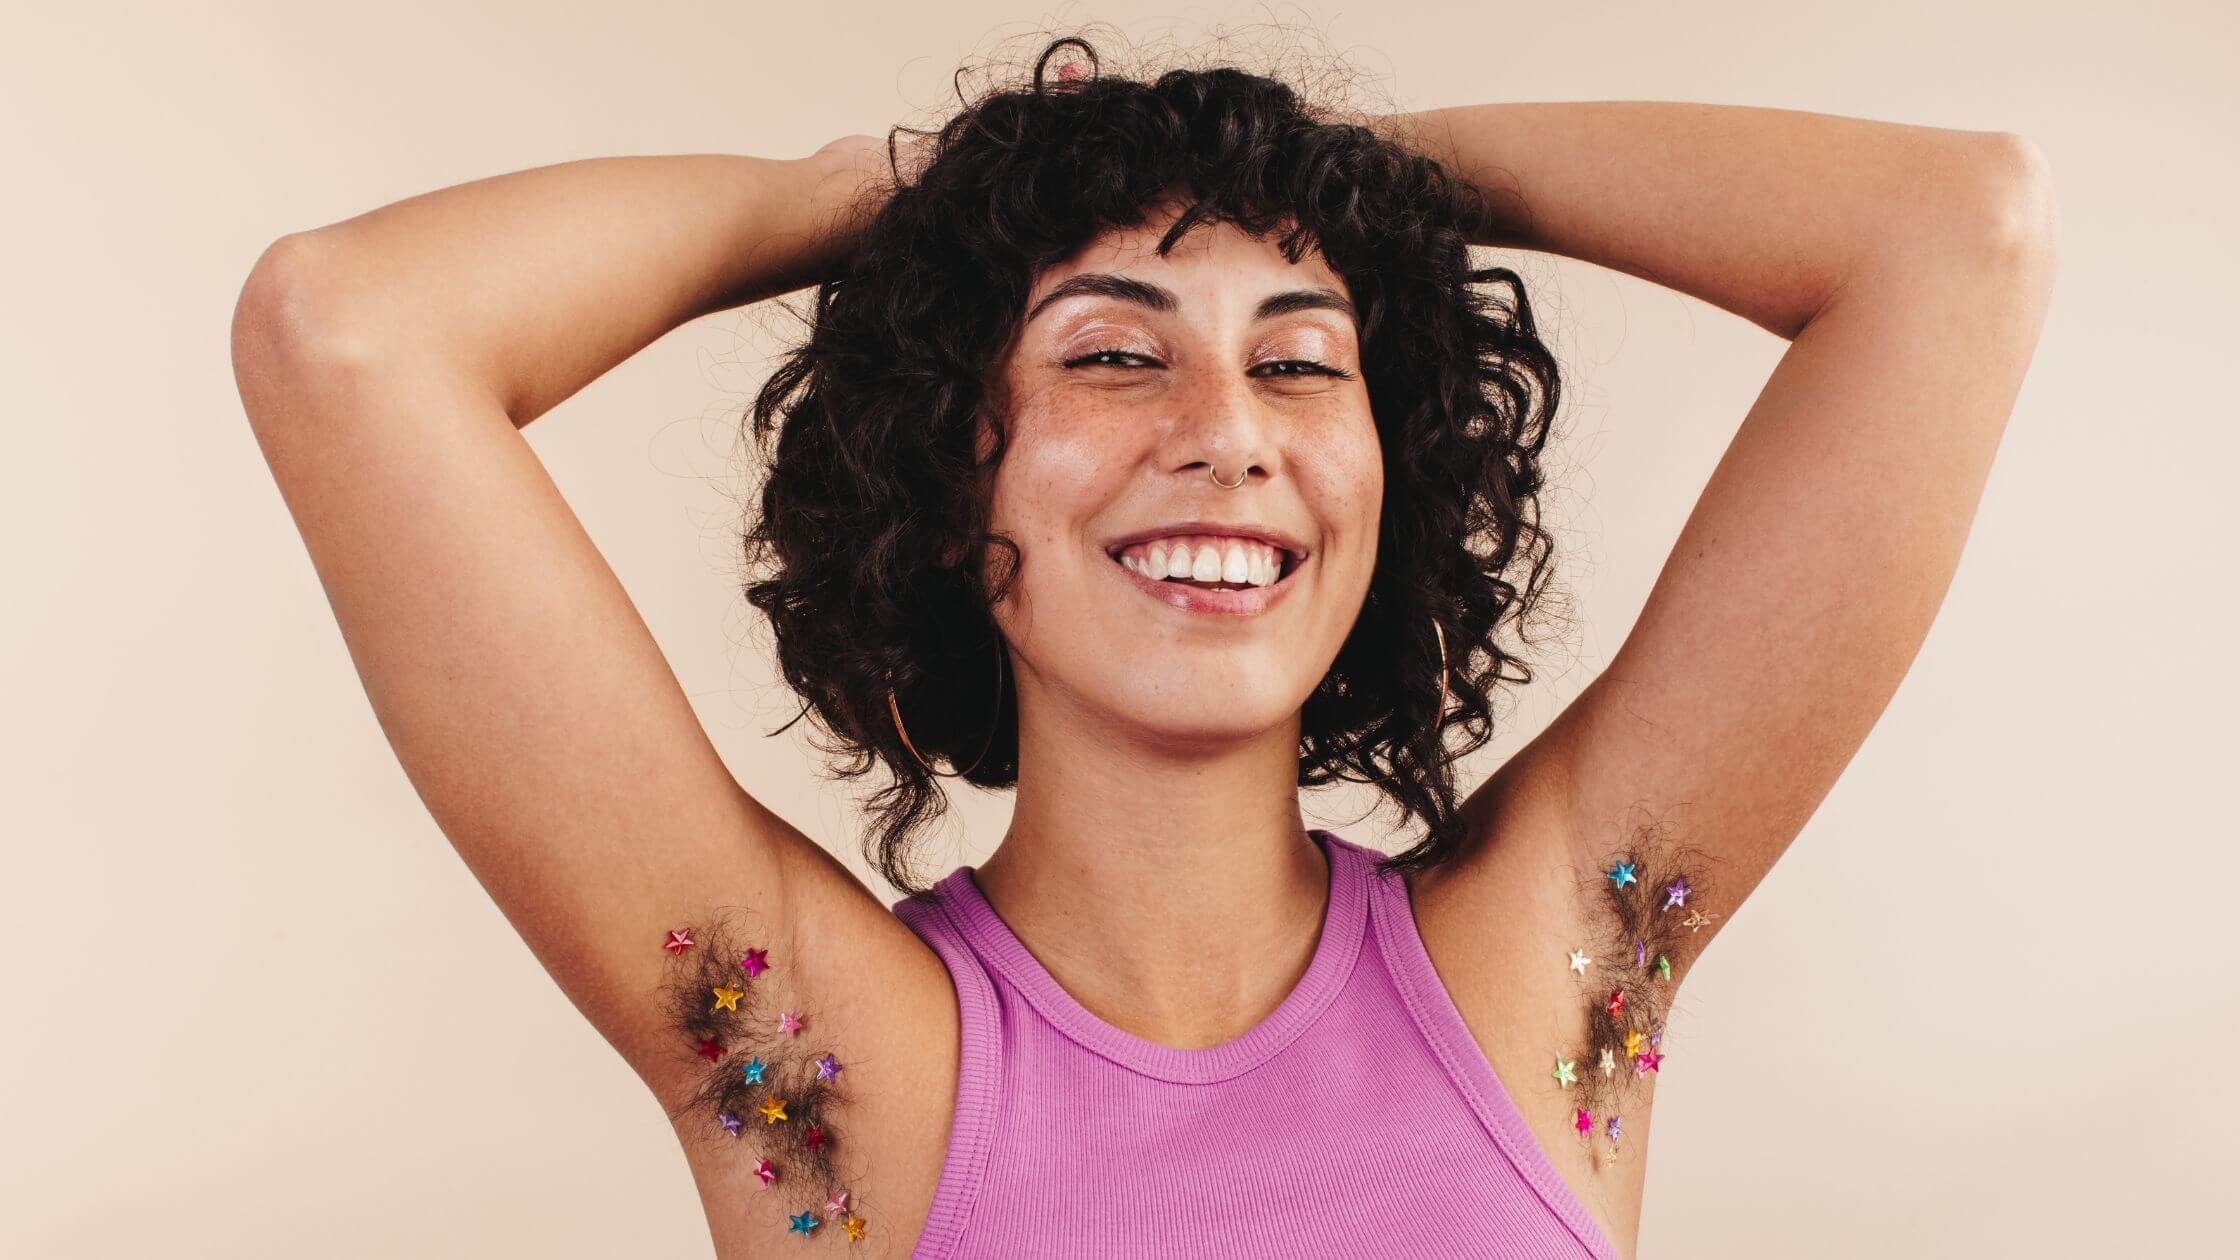 Emily Ratajkowski's armpit hair on full display in Harper's Bazaar